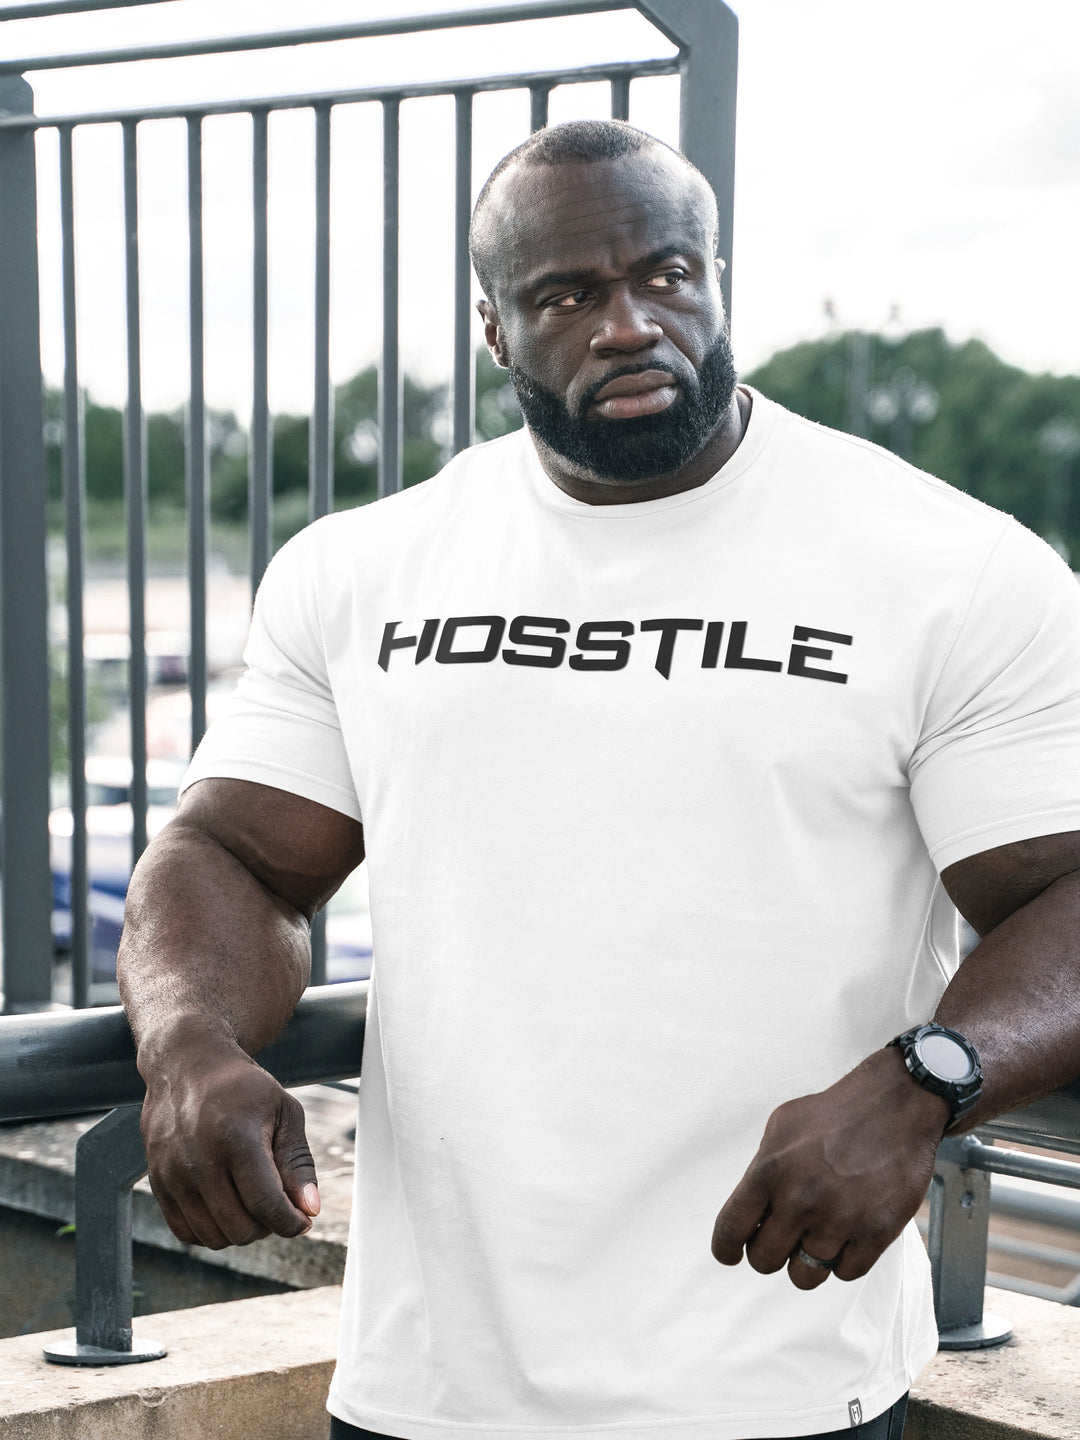 Bodybuilding Workout Shirts, Gym T-Shirts & Tops